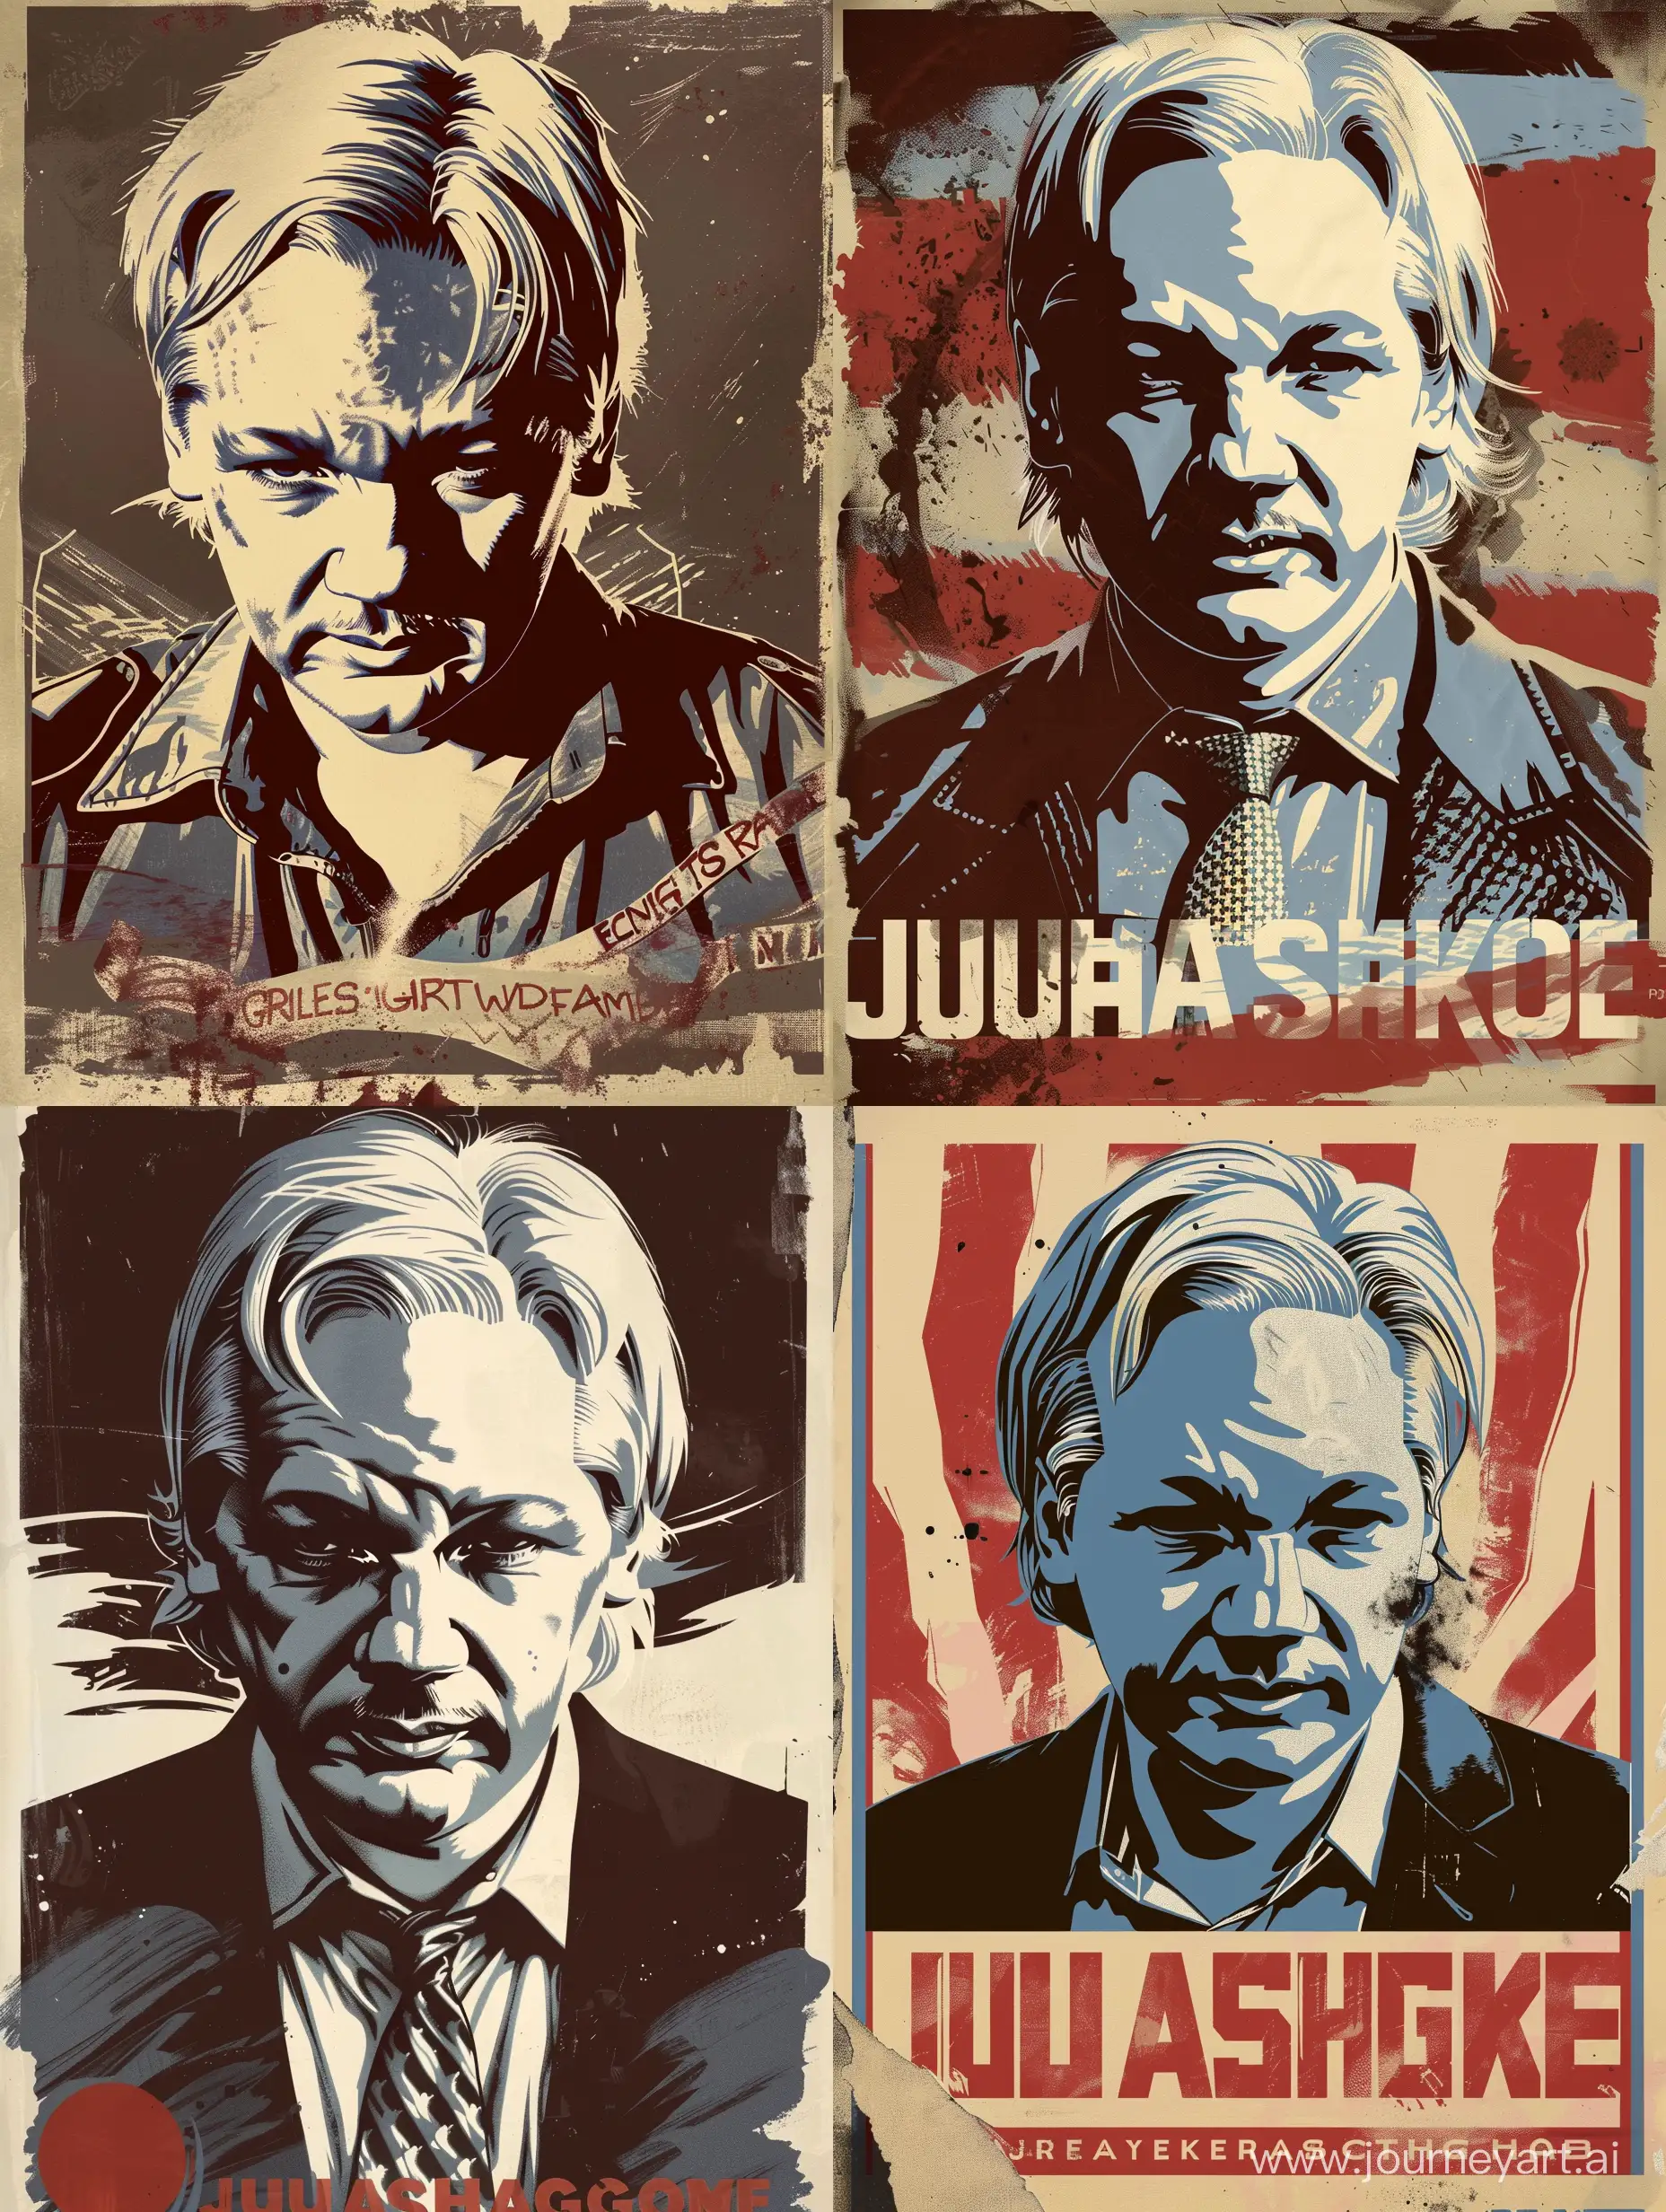 Vintage Poster art of Julian assange Exposing War crimes